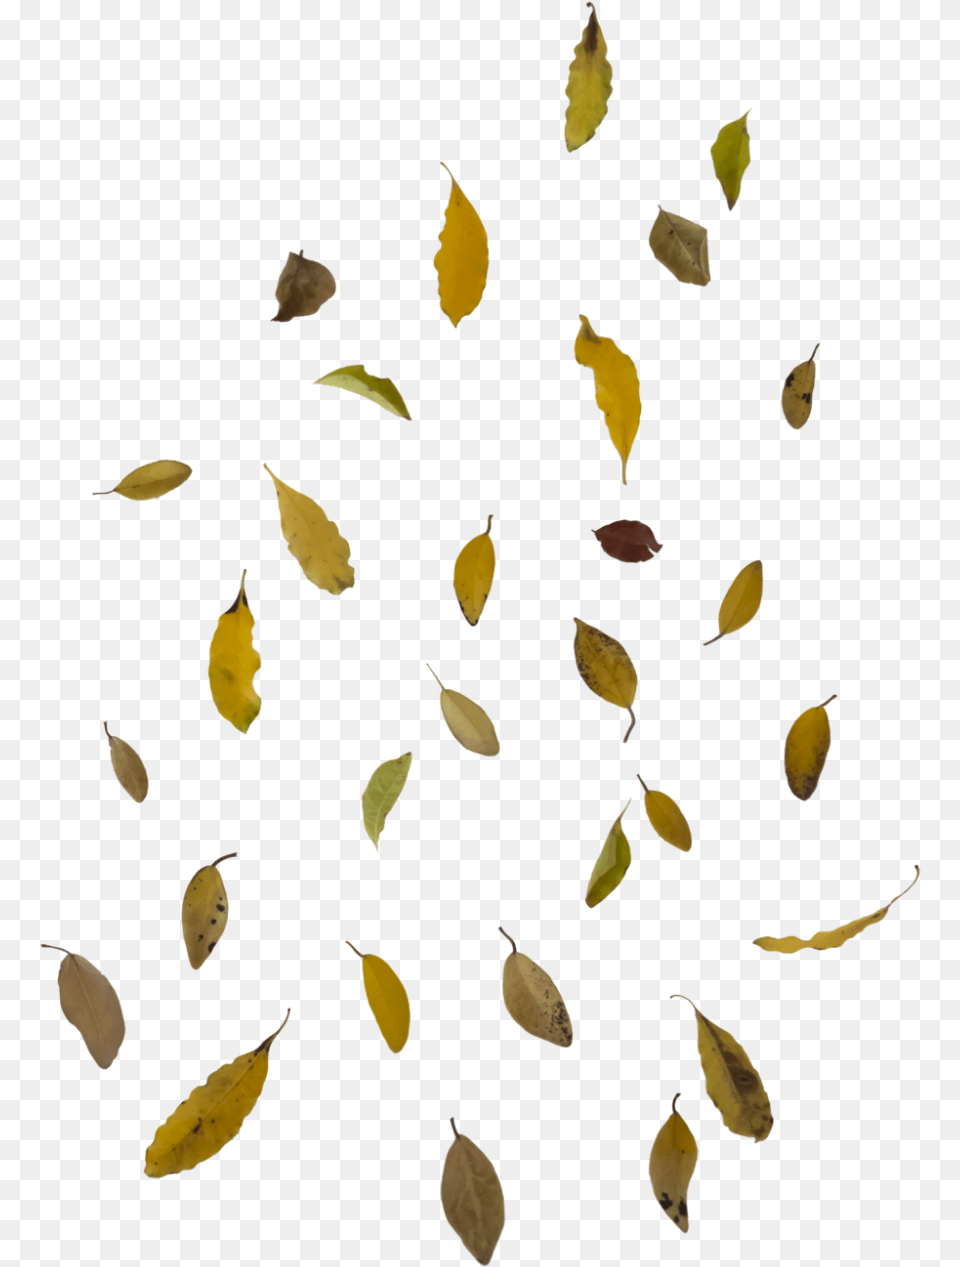 Falling Autumn Leaves Image Falling Leaves Transparent, Leaf, Plant, Flower, Petal Free Png Download